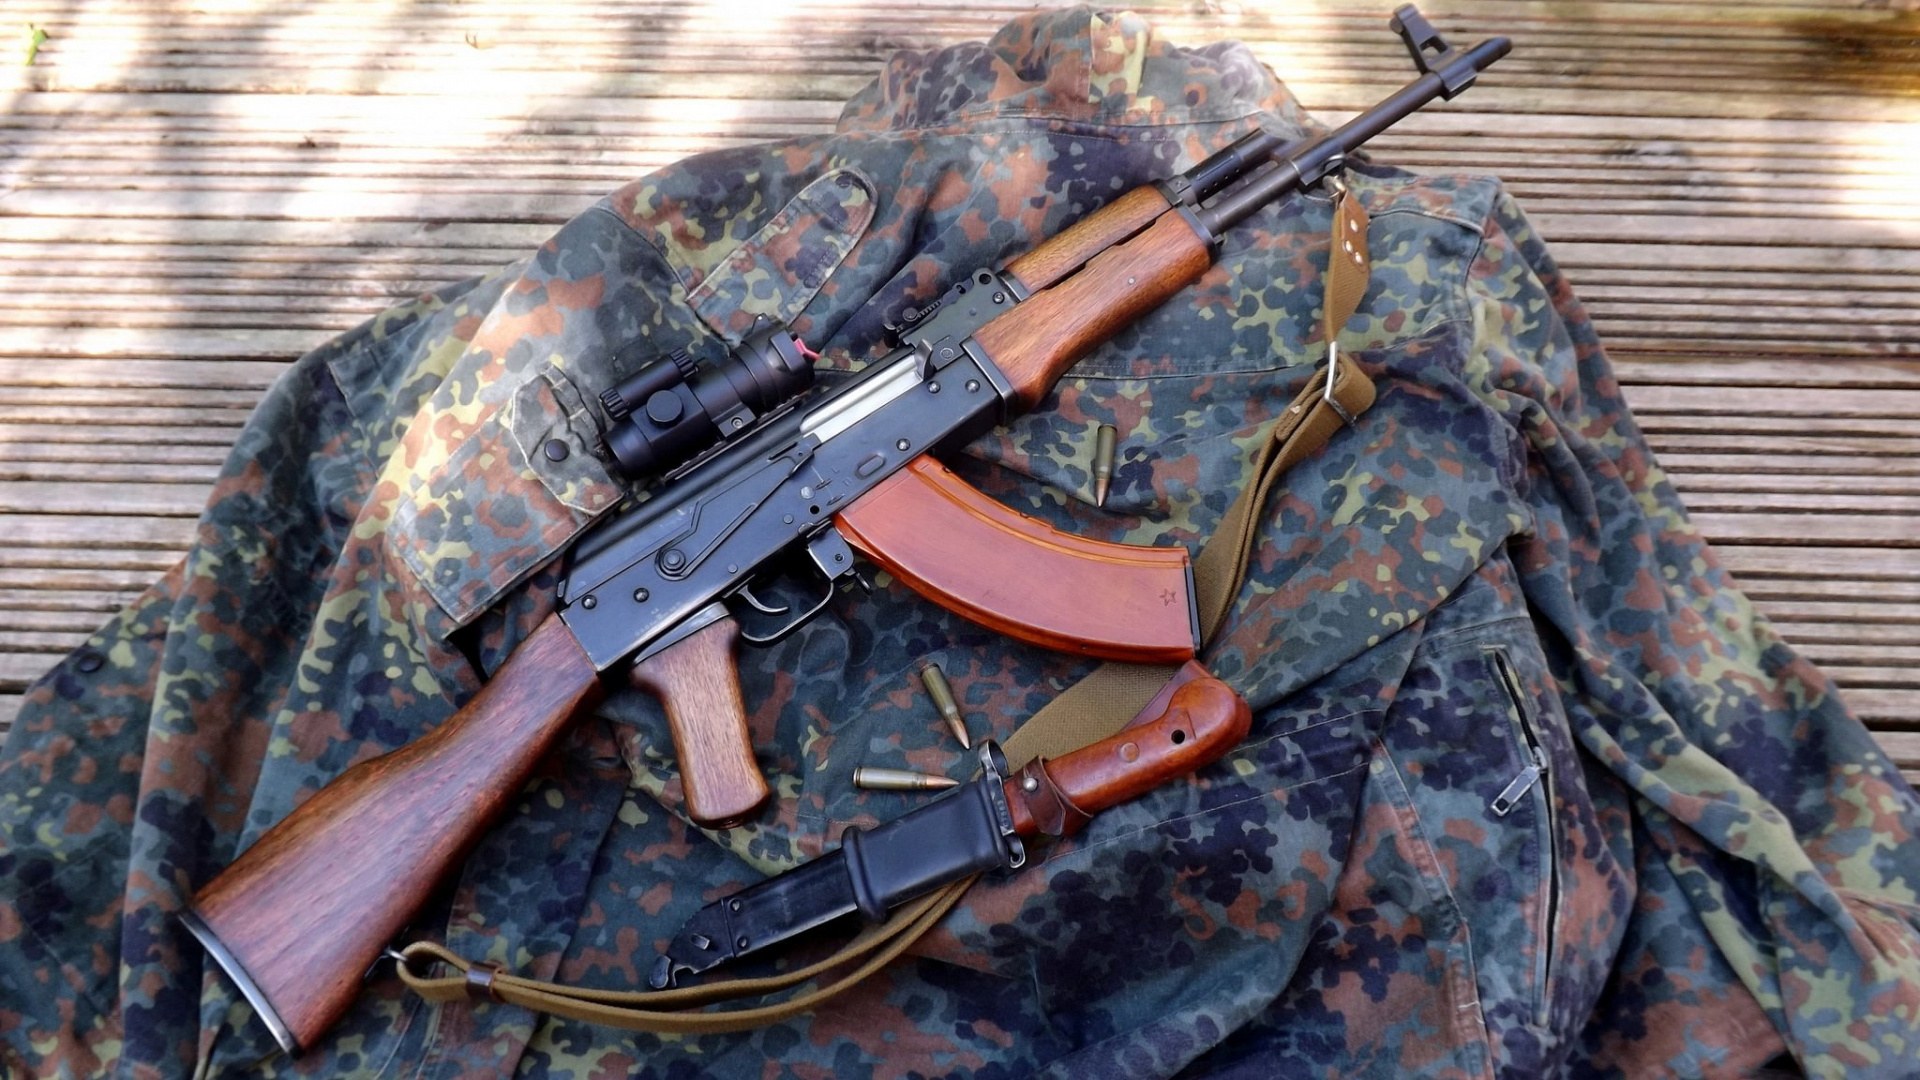 Akm, 卡拉什尼科夫步枪, 枪, 视线, 枪支 壁纸 1920x1080 允许